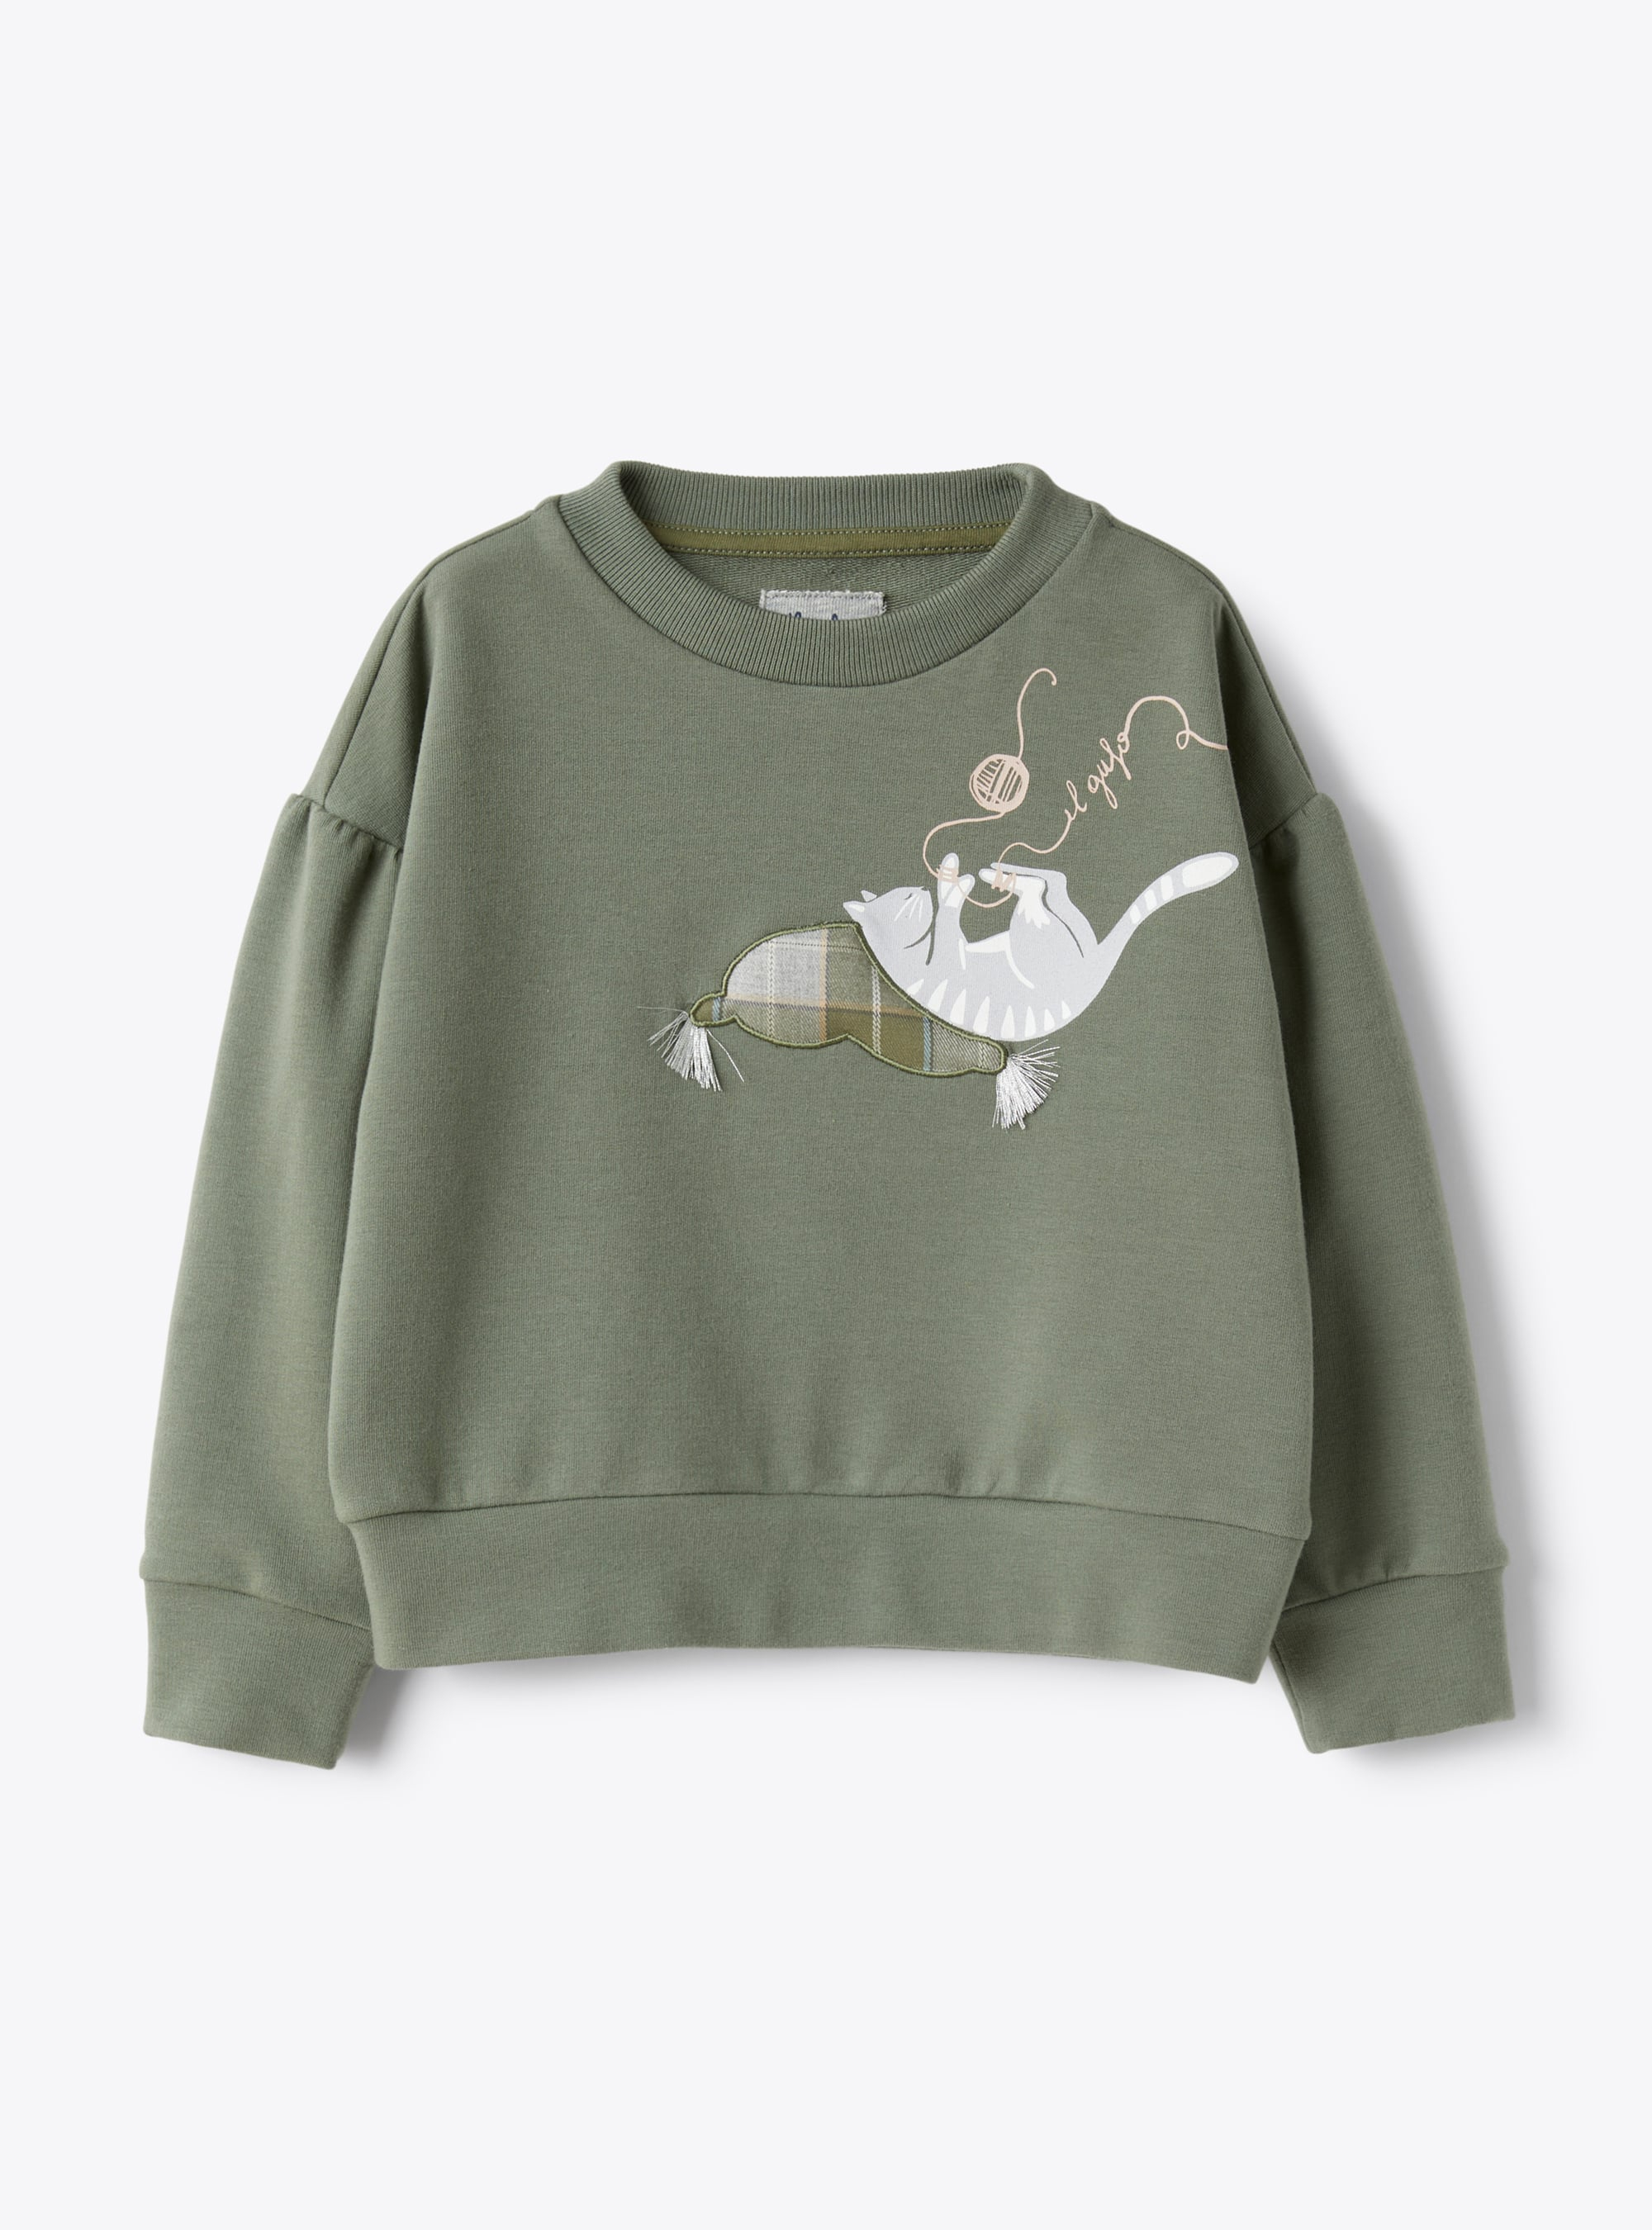 Stretchy crew-neck sweatshirt with cat print design - Sweatshirts - Il Gufo